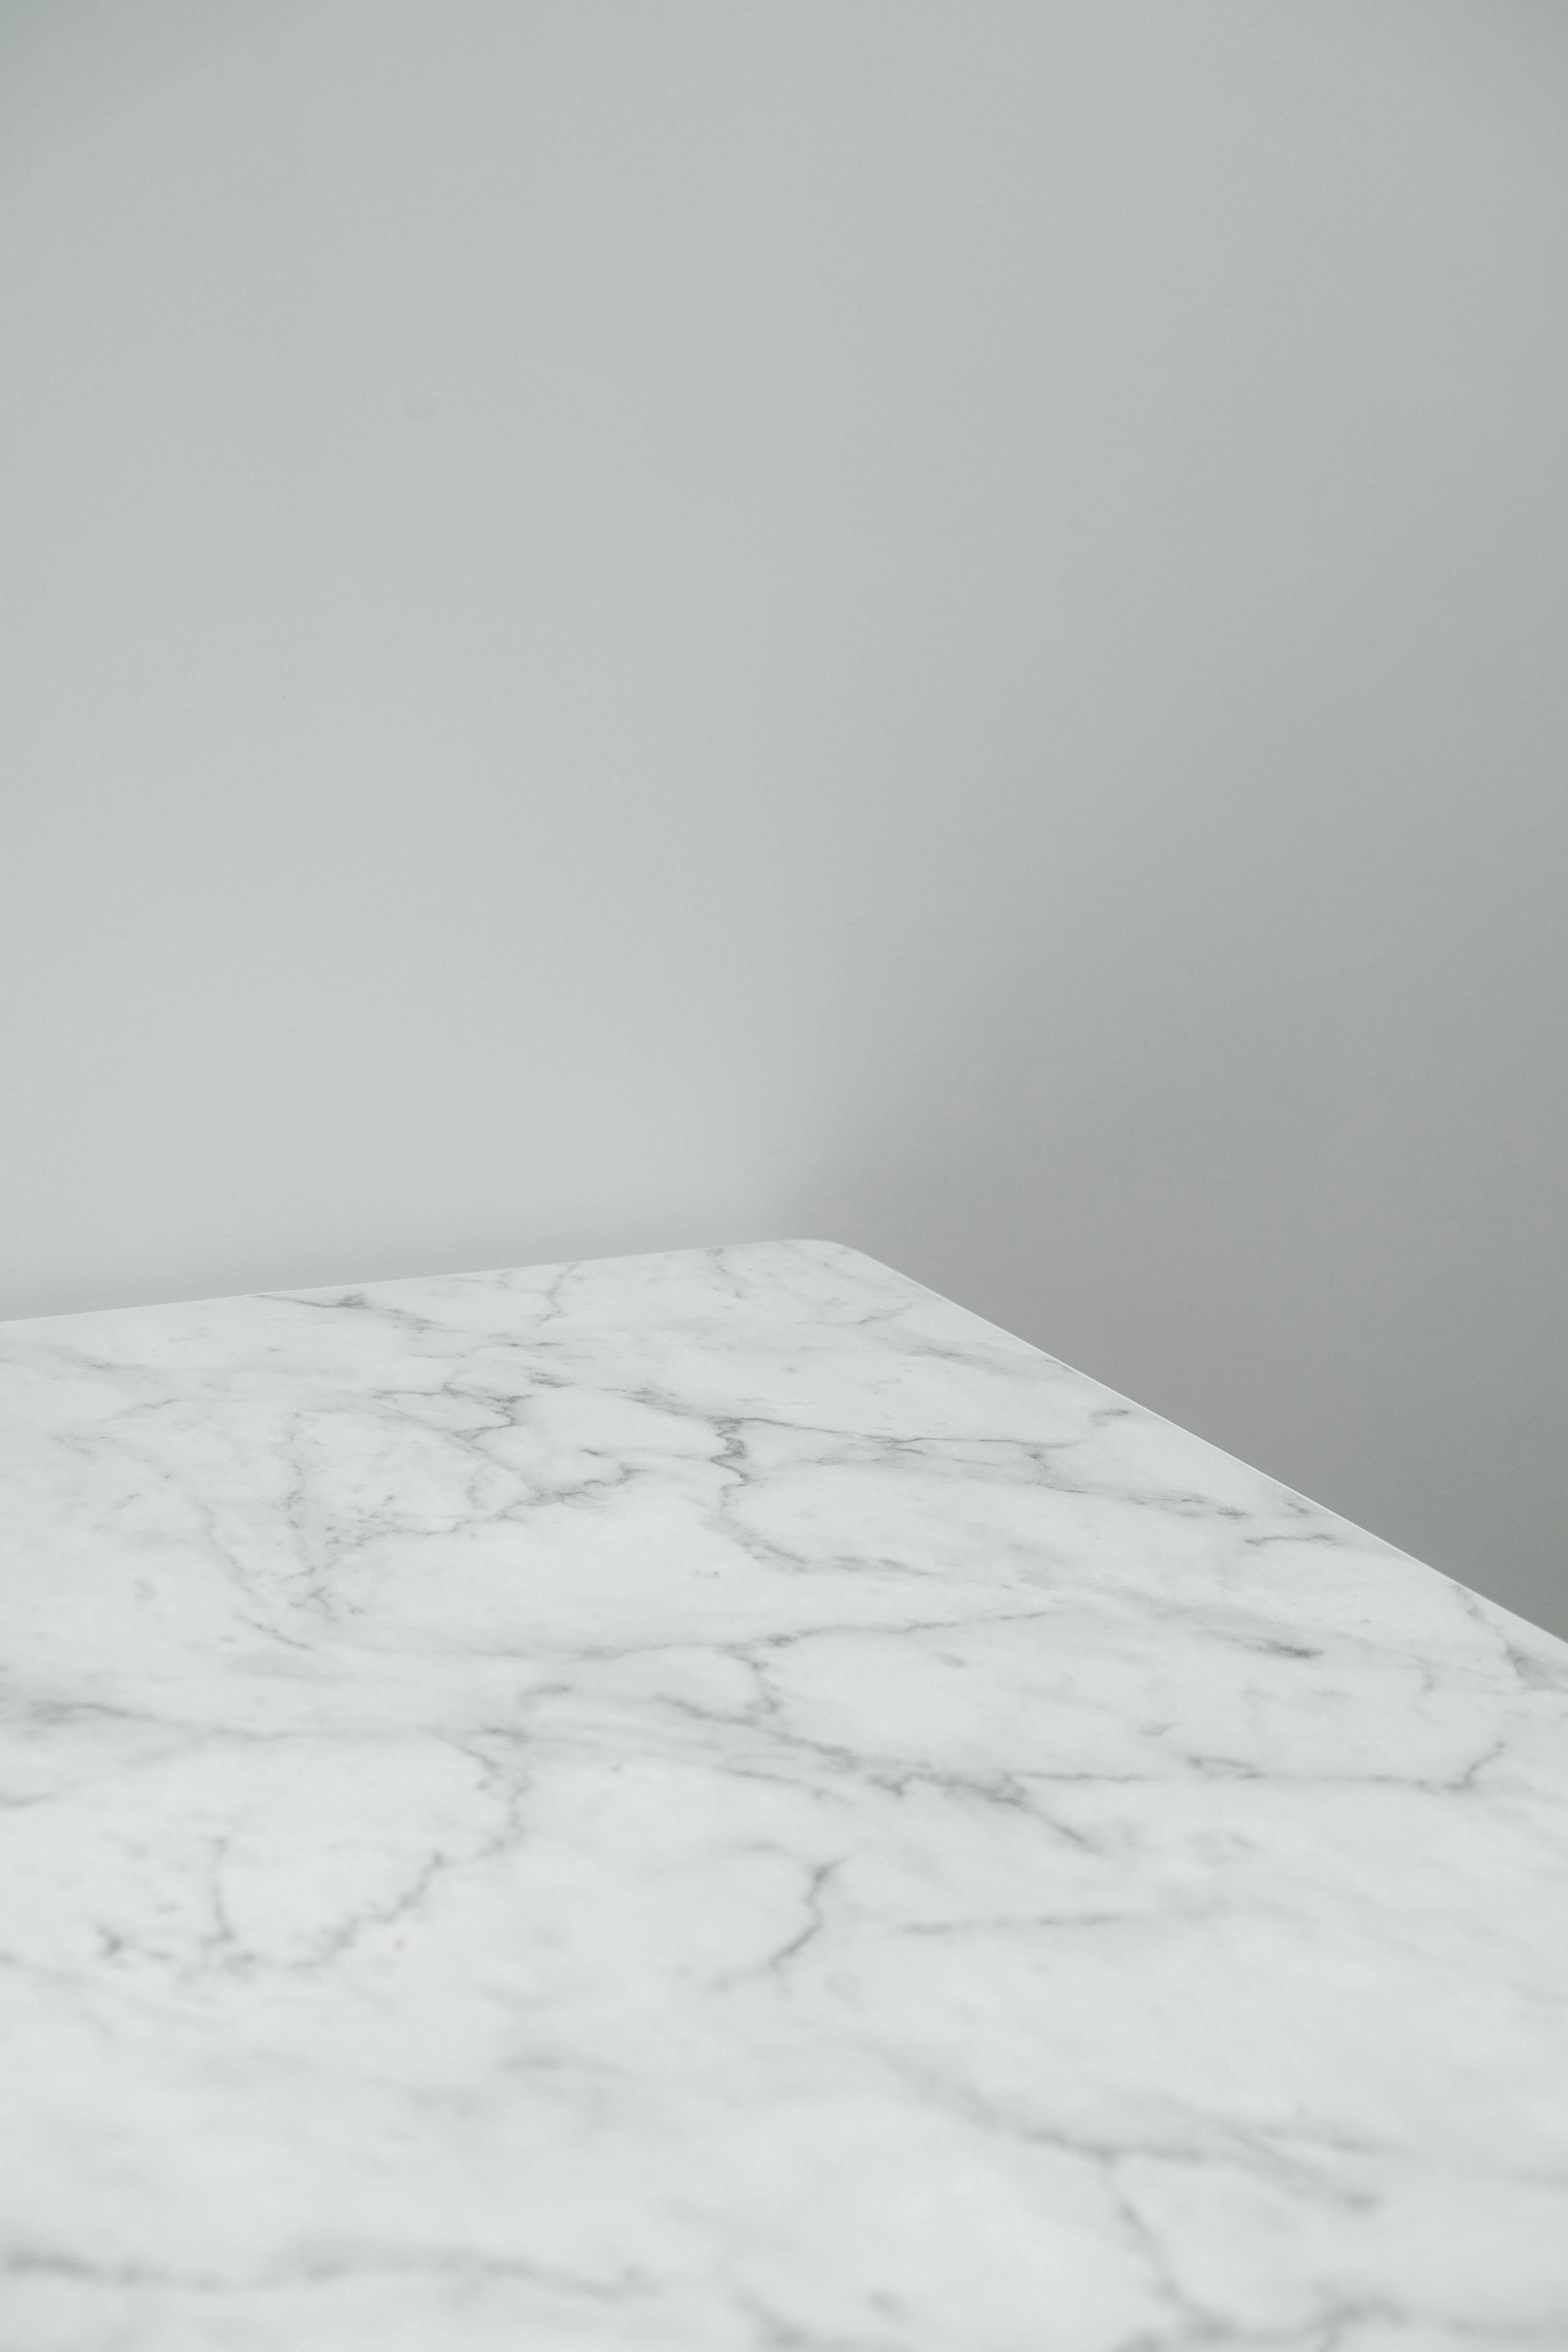 Elegant White Marble Countertop in a Modern Kitchen Wallpaper